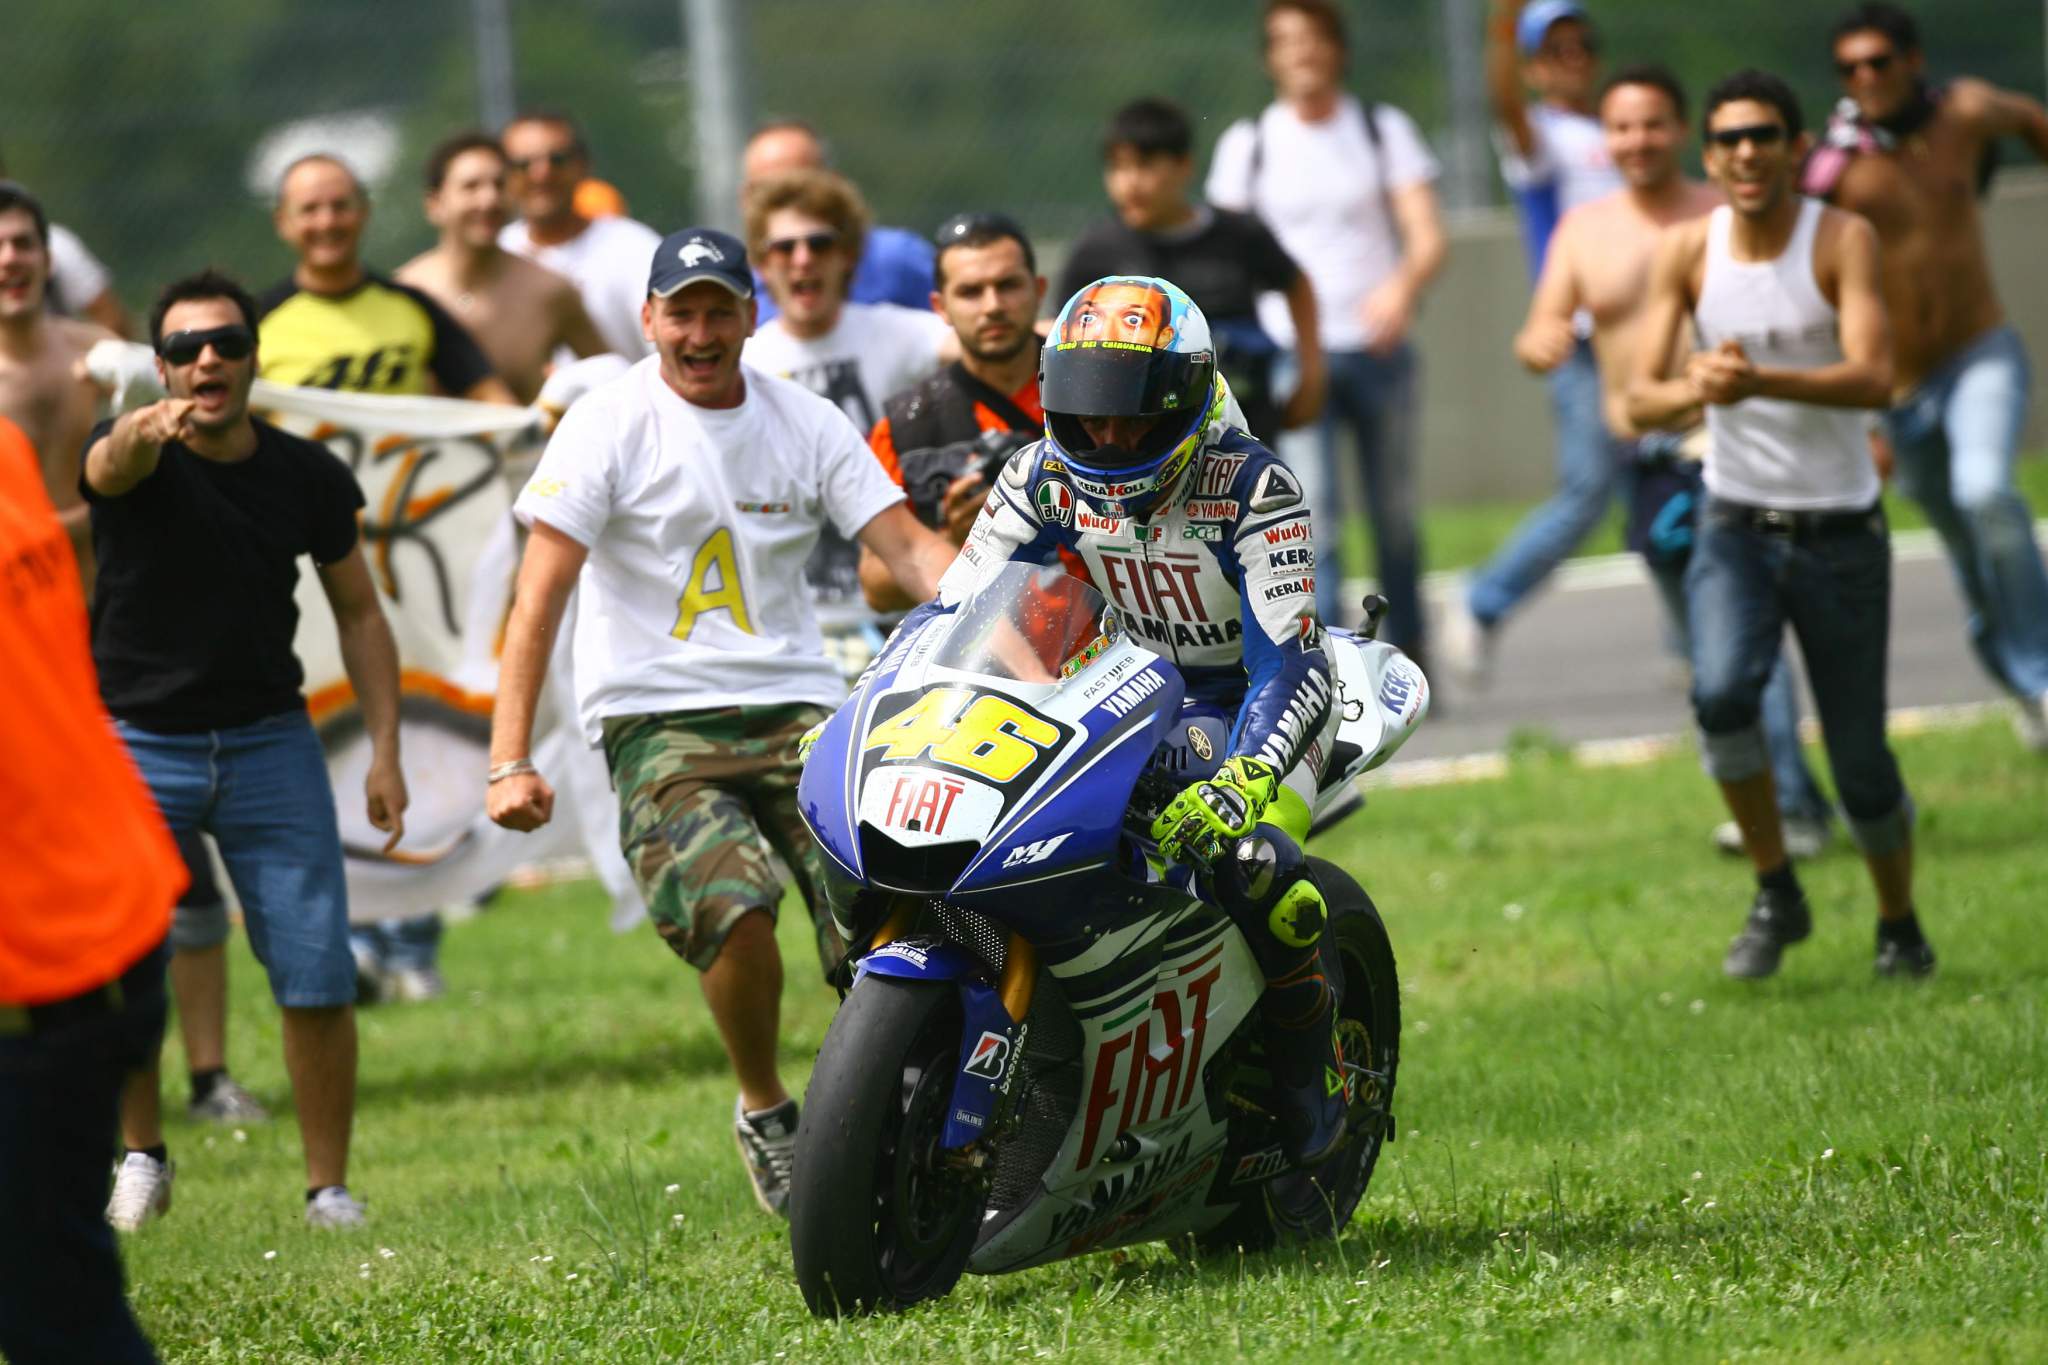 Who will Mugello MotoGP crowd love when Rossi retires? - The Race